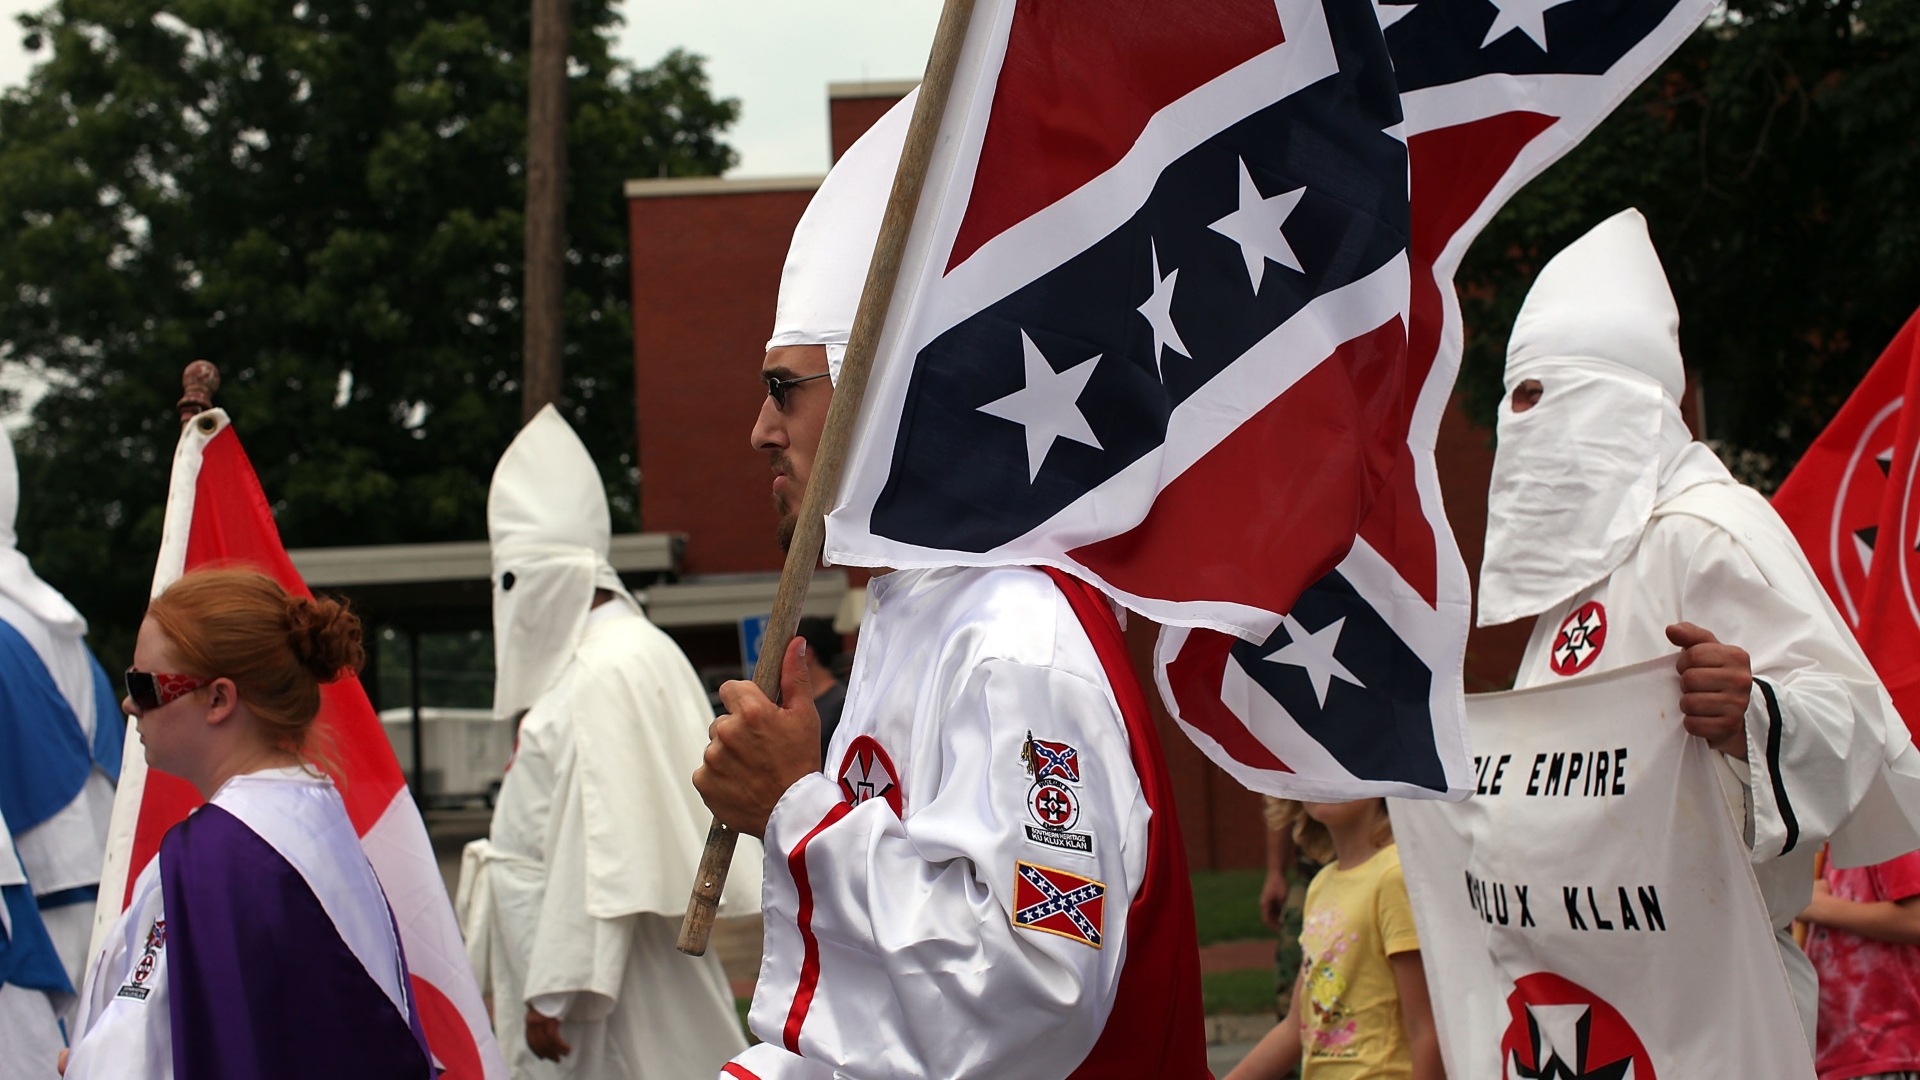 El Ku Klux Klan (KKK) fue fundado el 24 de diciembre de 1865